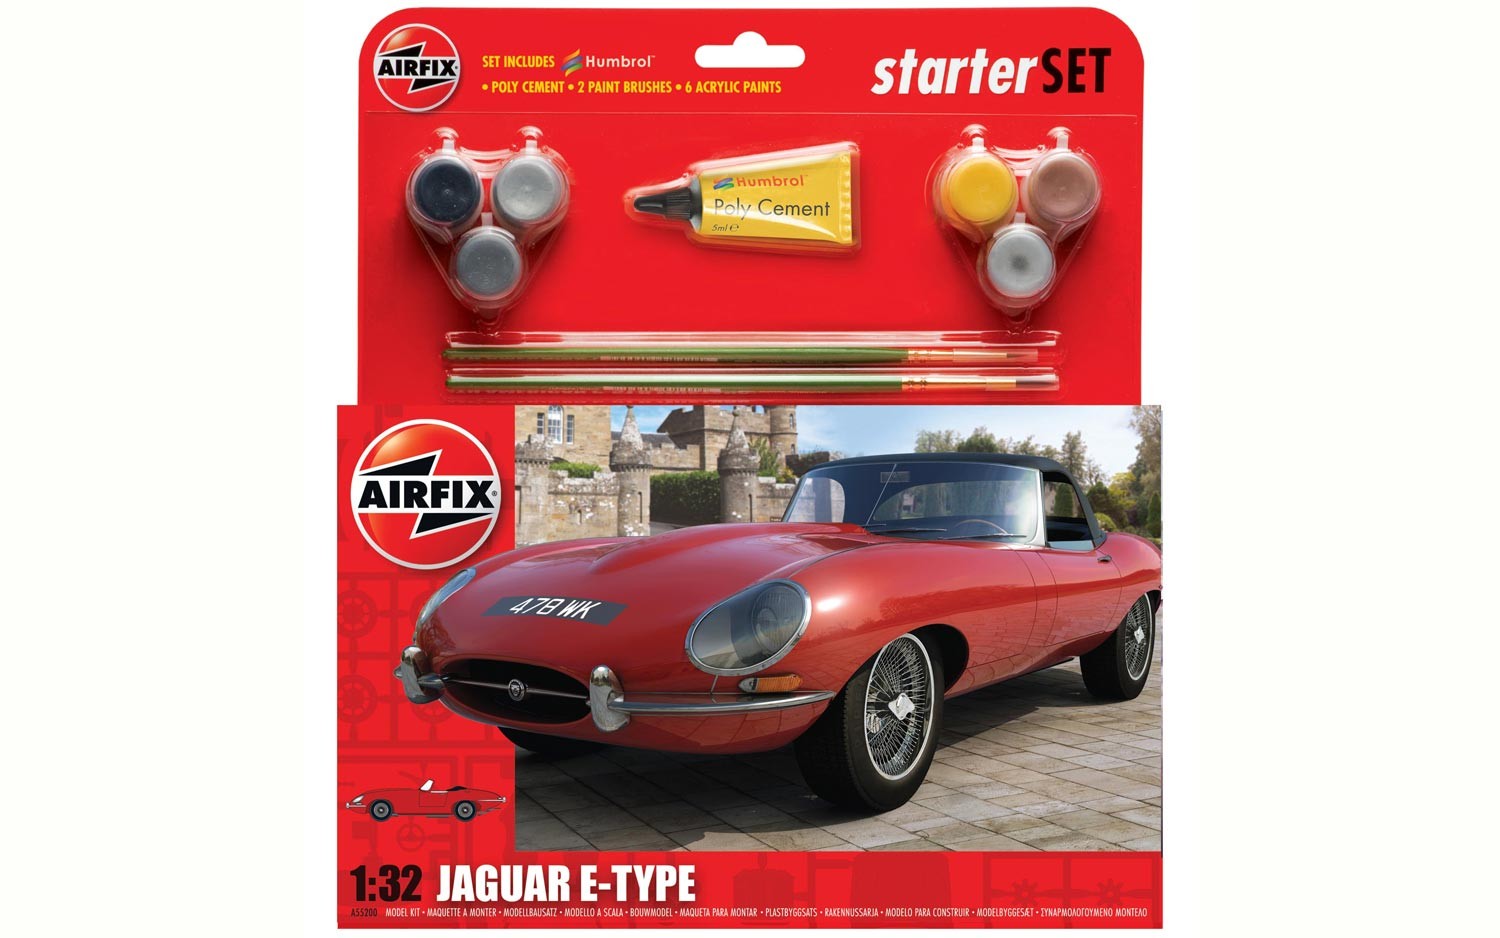 Airfix Starter Set Med "E" Type Jaguar new in 1:32 bouwpakket met lijm en verf